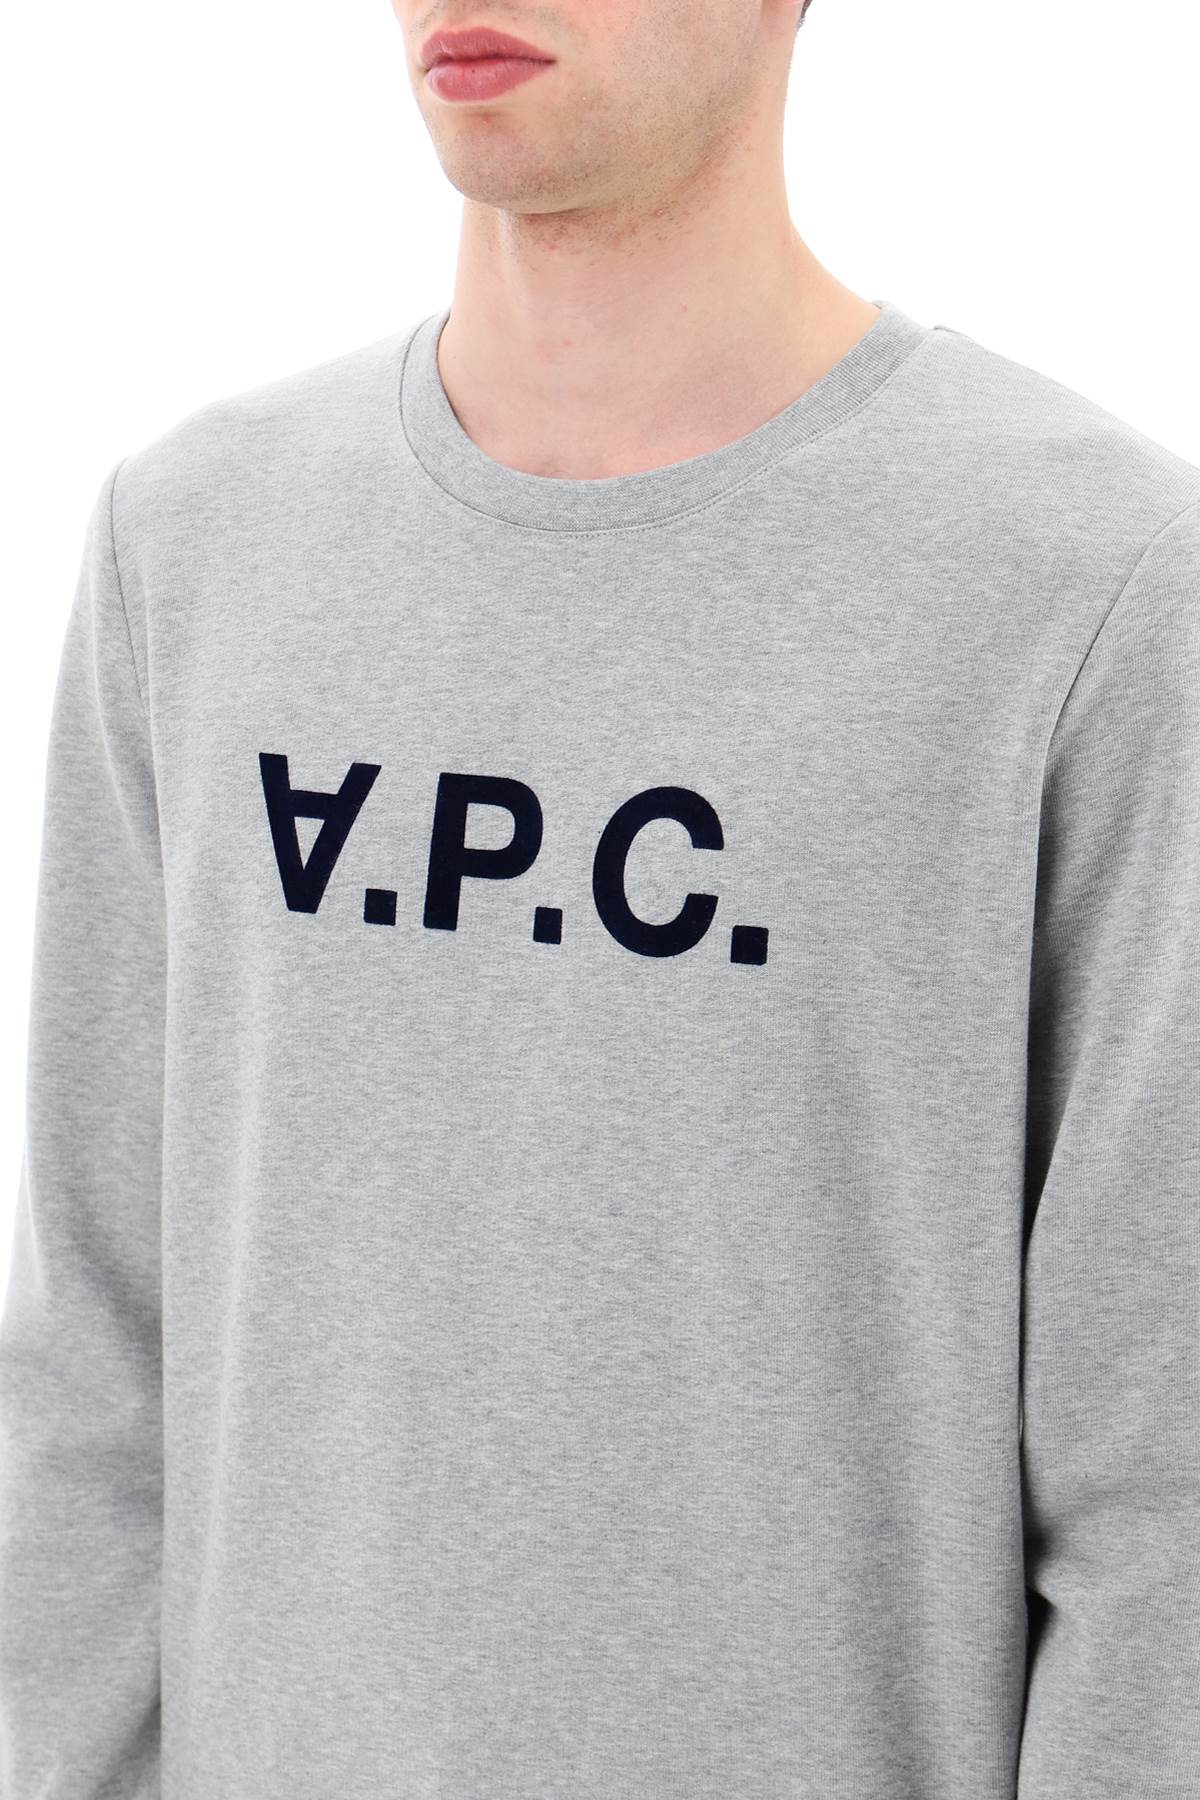 A.p.c. flock v.p.c. logo sweatshirt-3